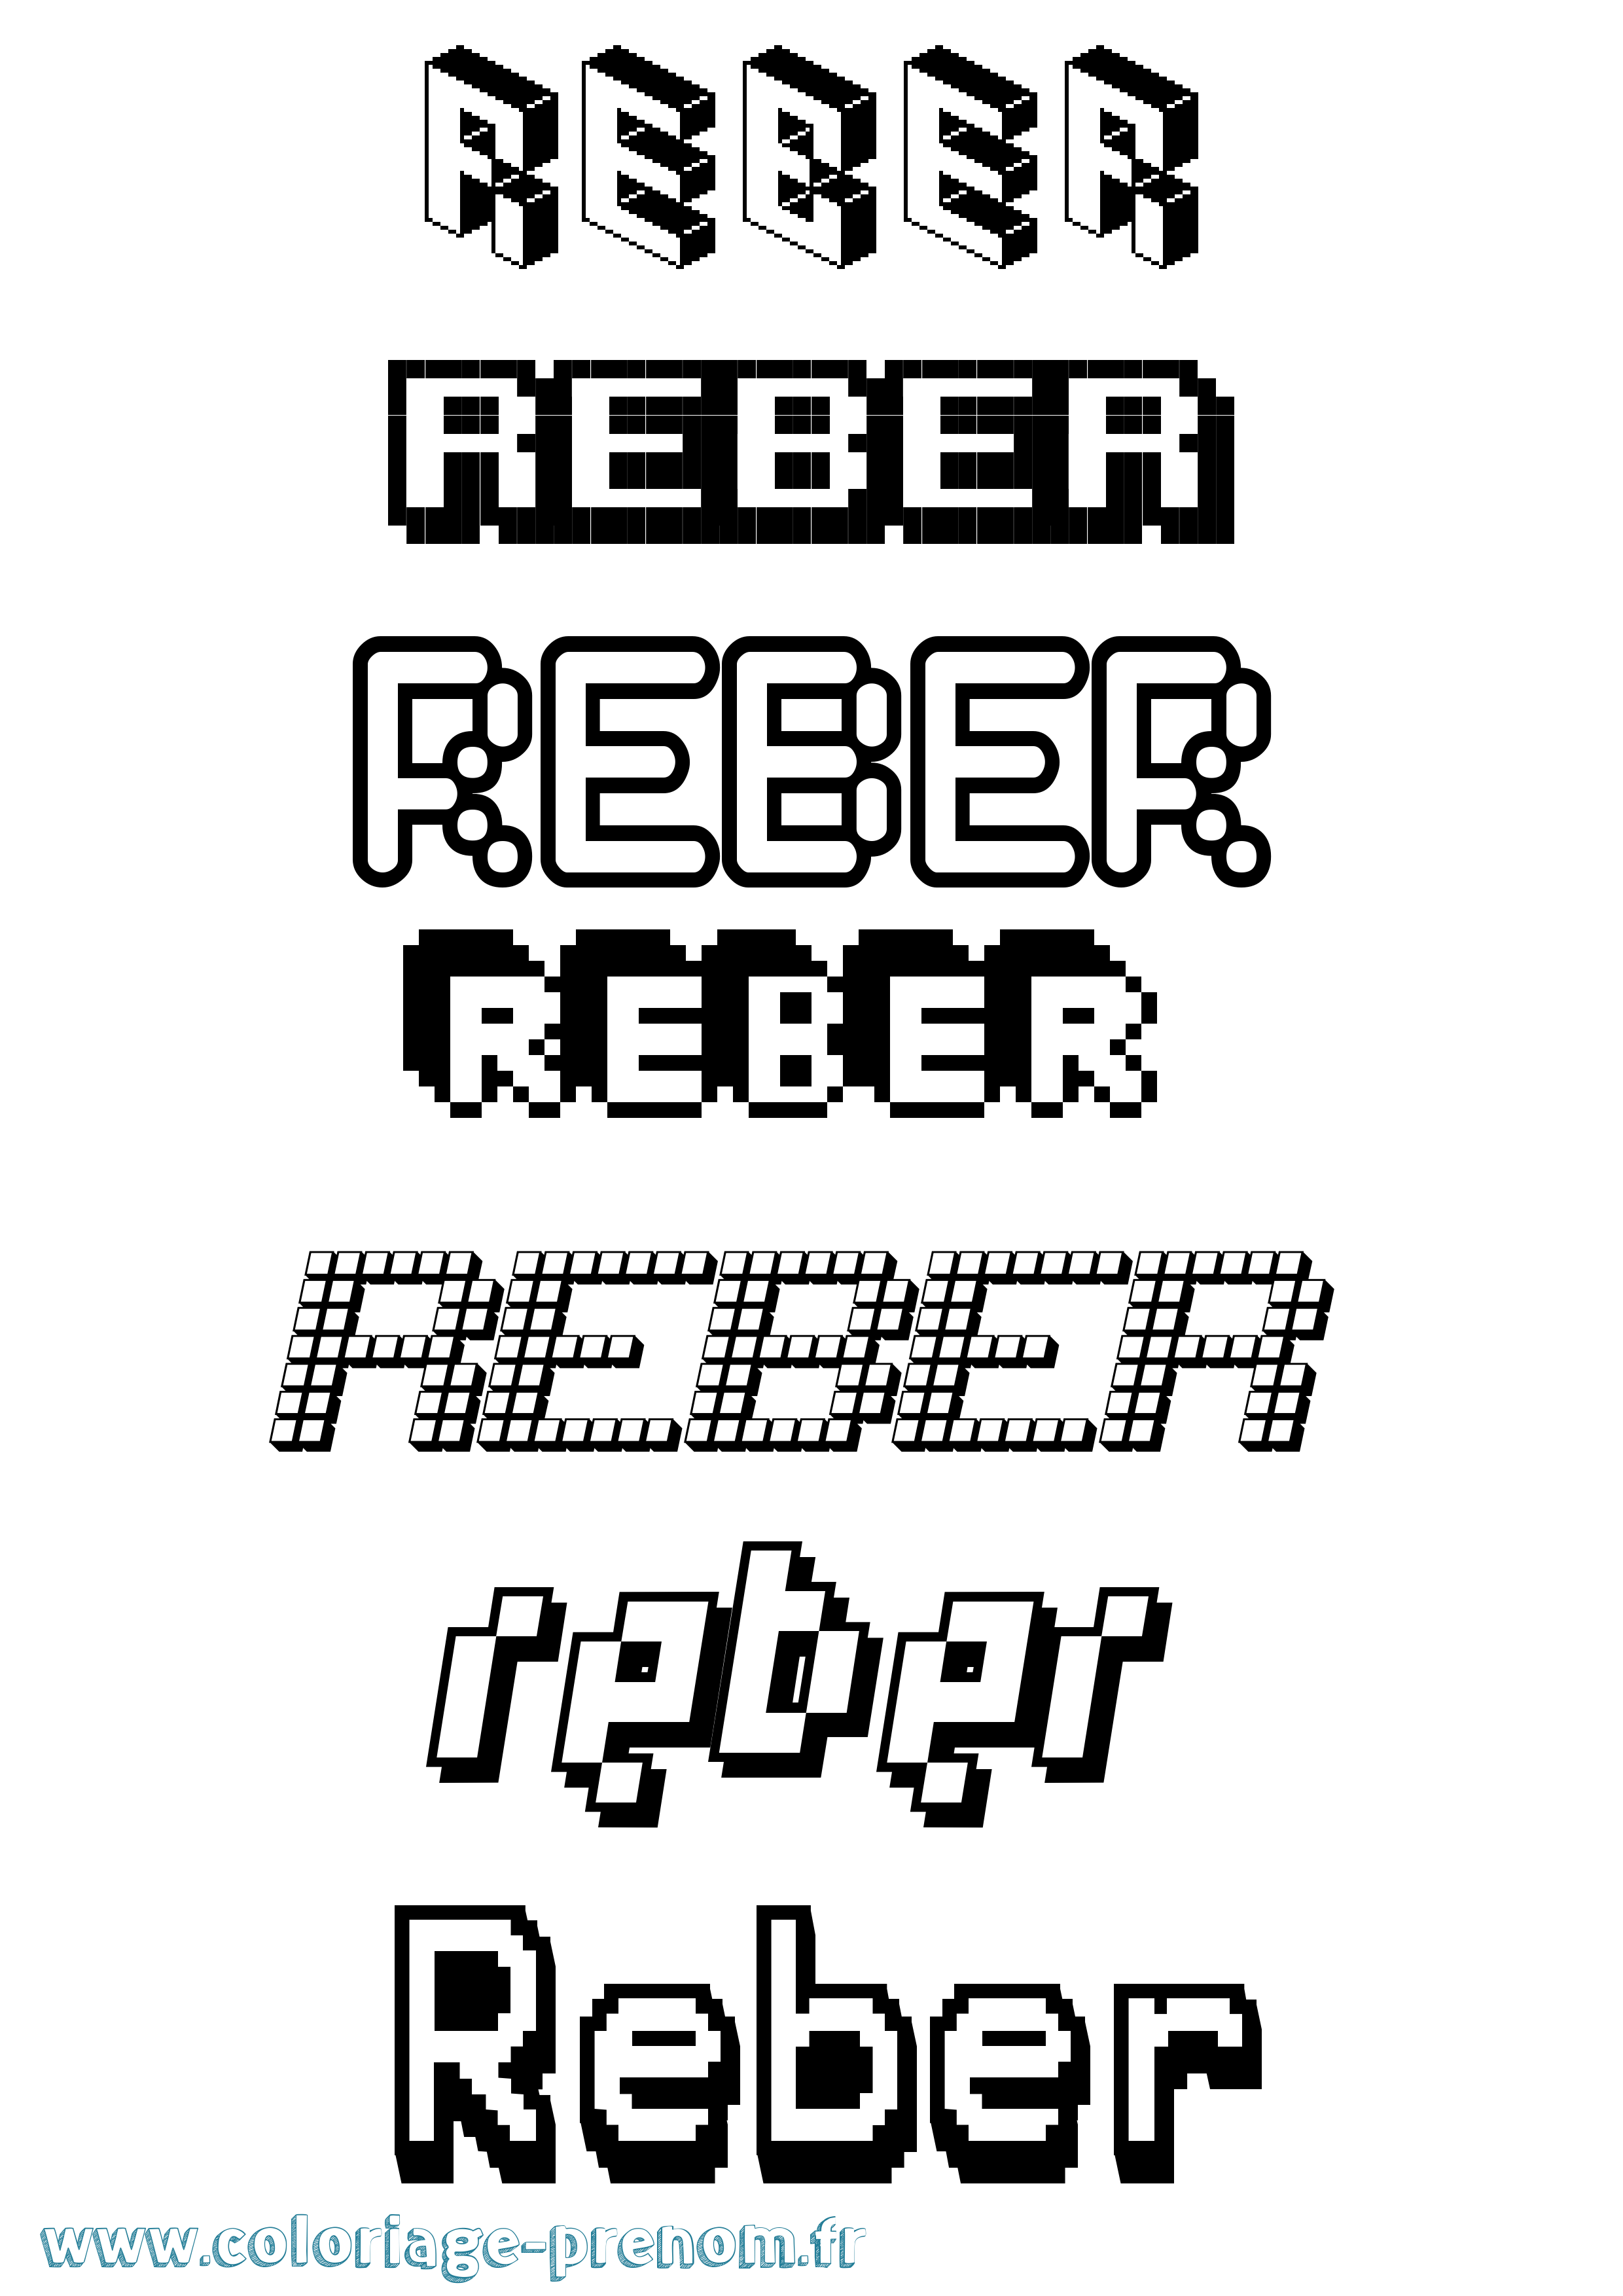 Coloriage prénom Reber Pixel